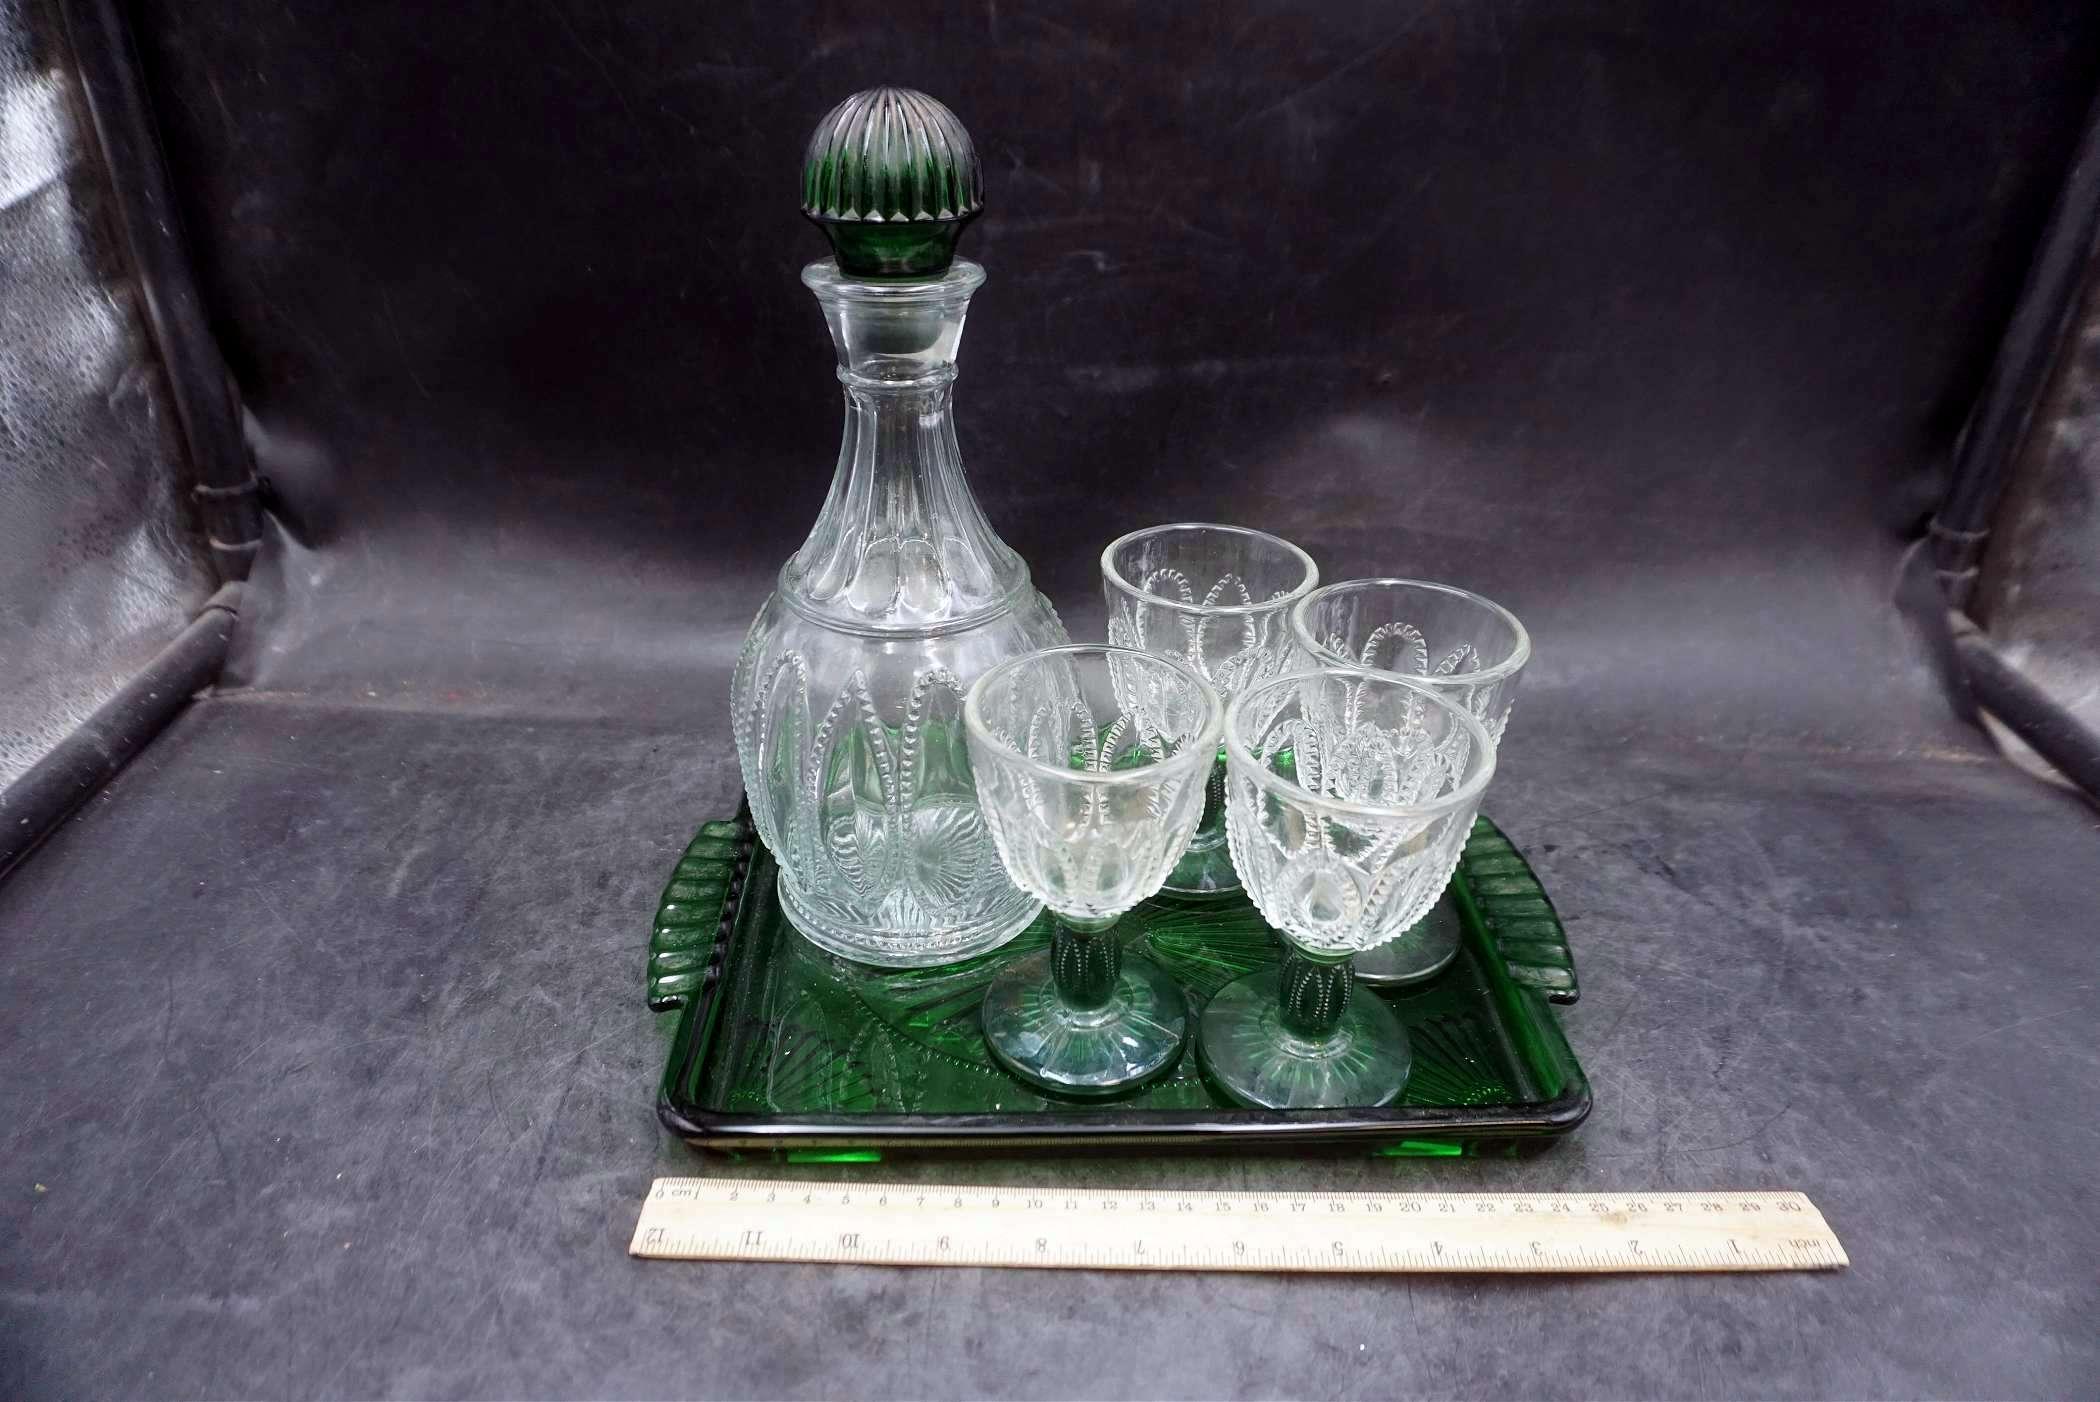 Avon Green Glass Serving Set - Tray, Decanter & Glasses